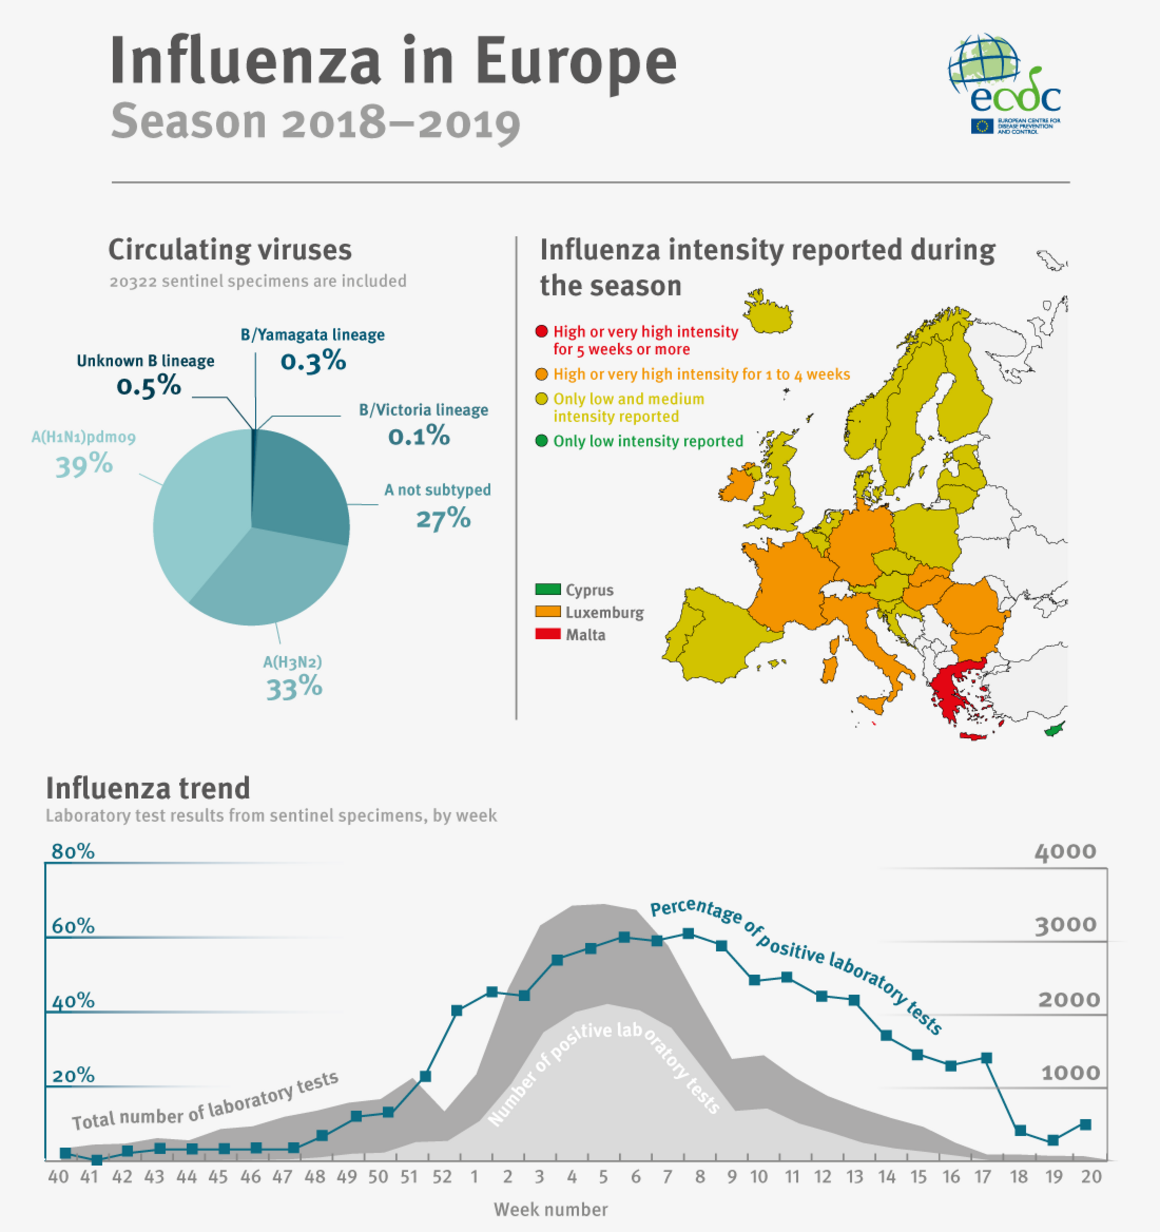 This infographic summarises the influenza season 2018-2019.